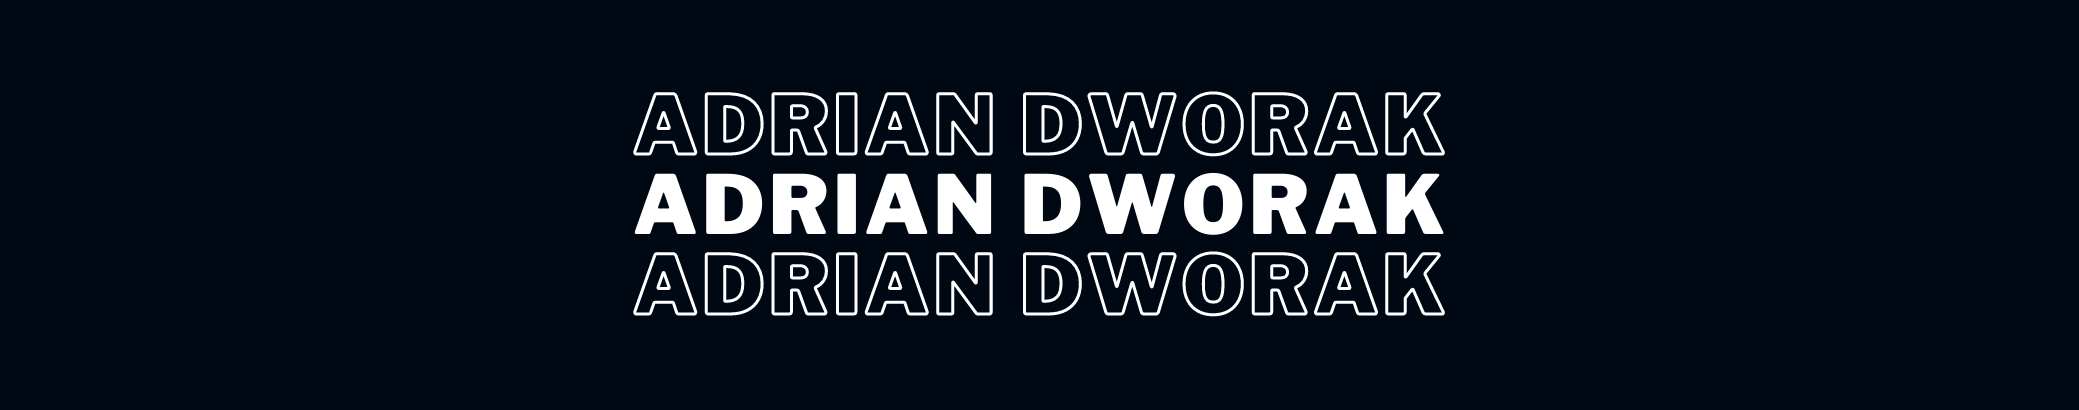 Adrian Dworak's profile banner